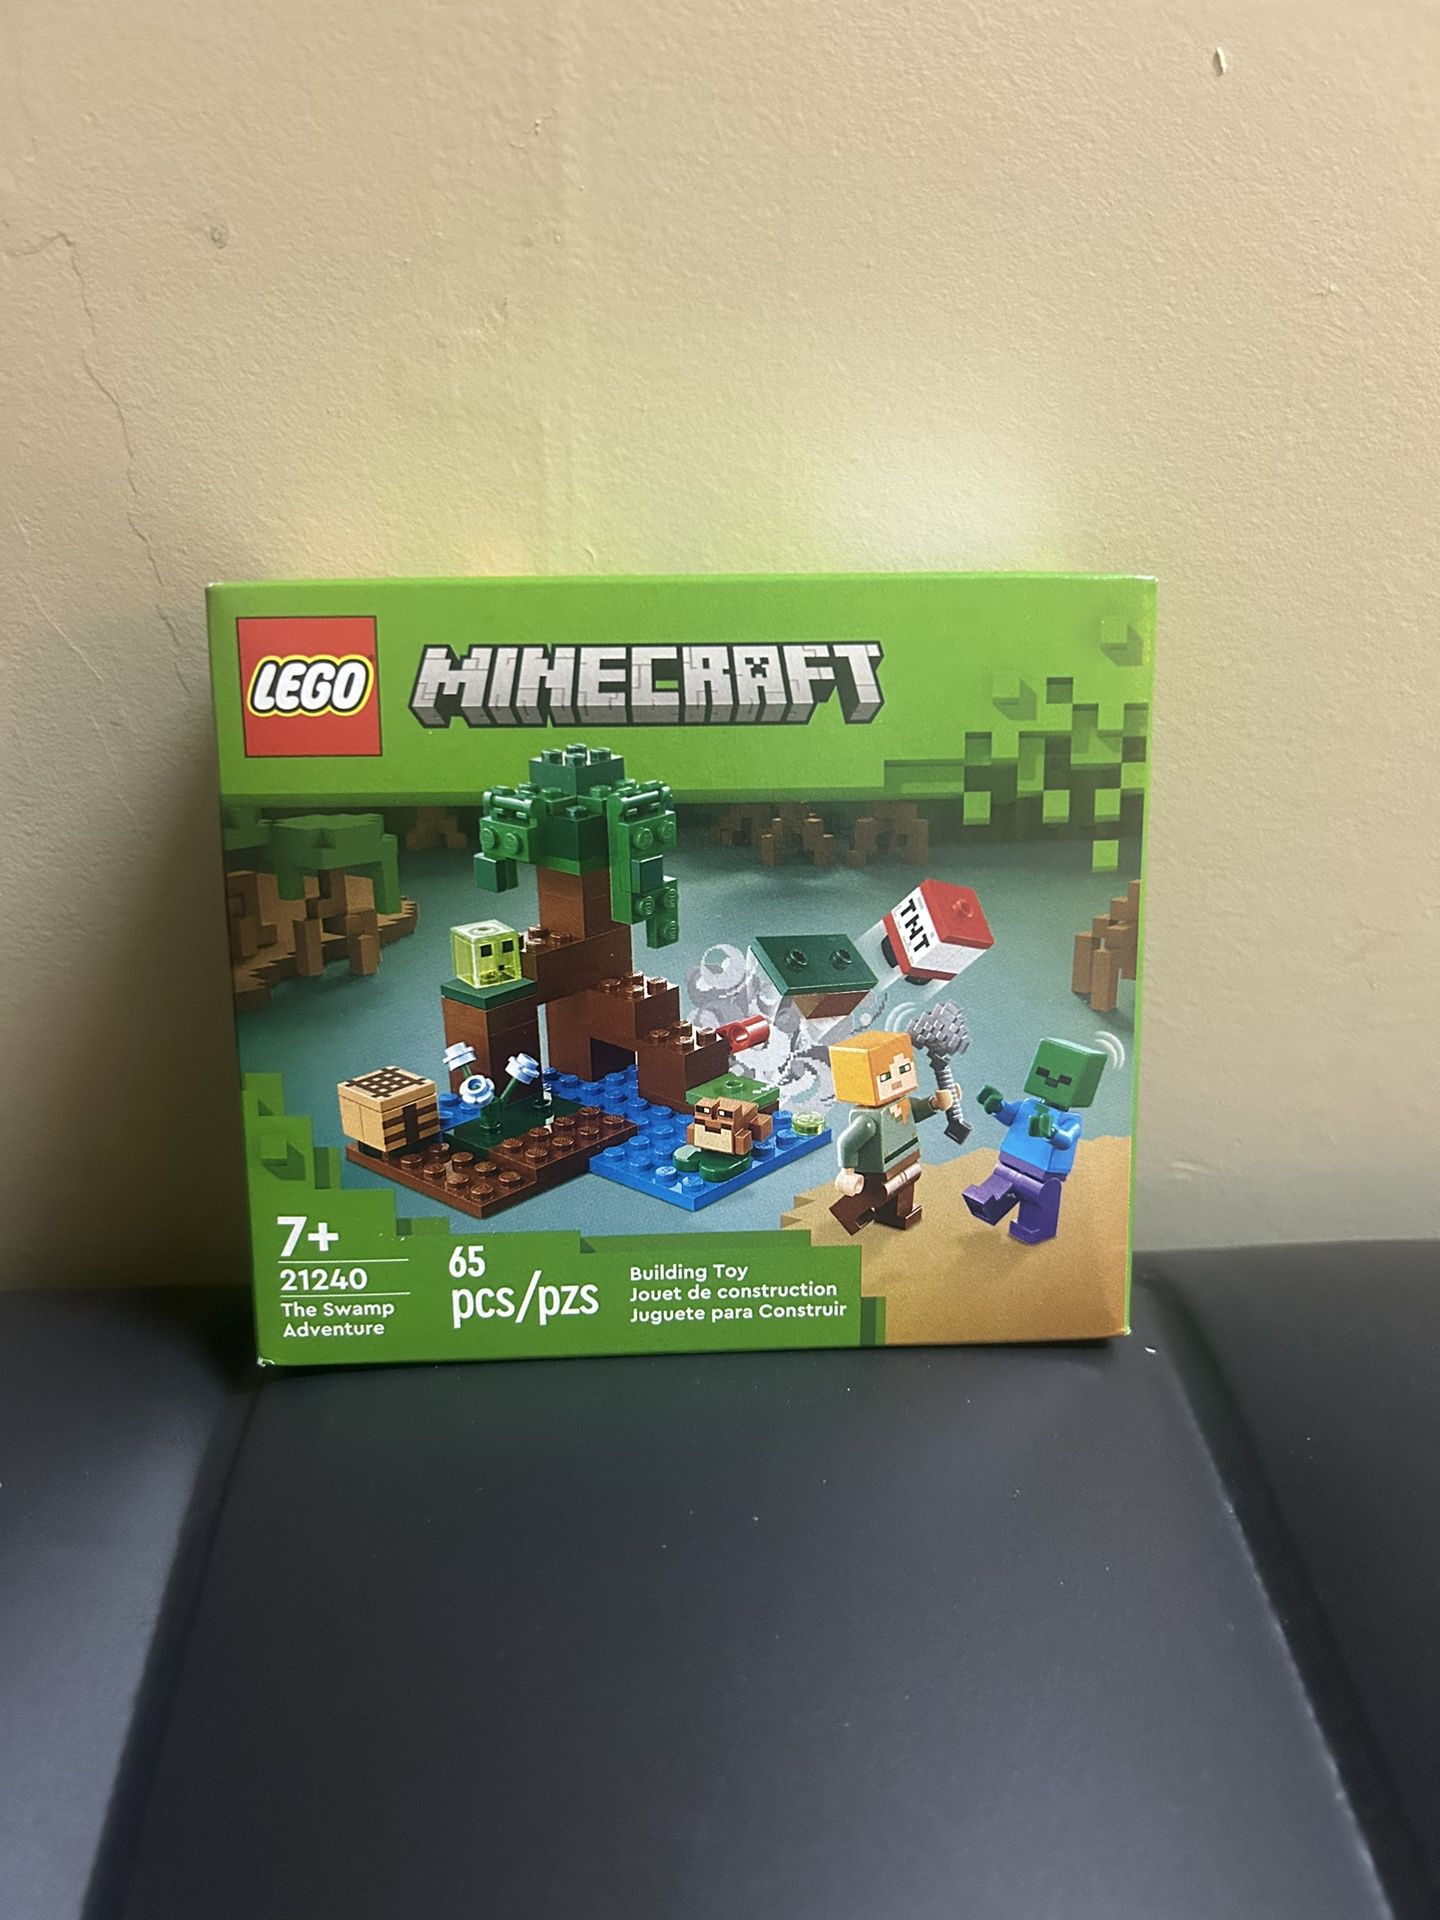 Lego Minecraft: The Swamp Adventure Set 21240